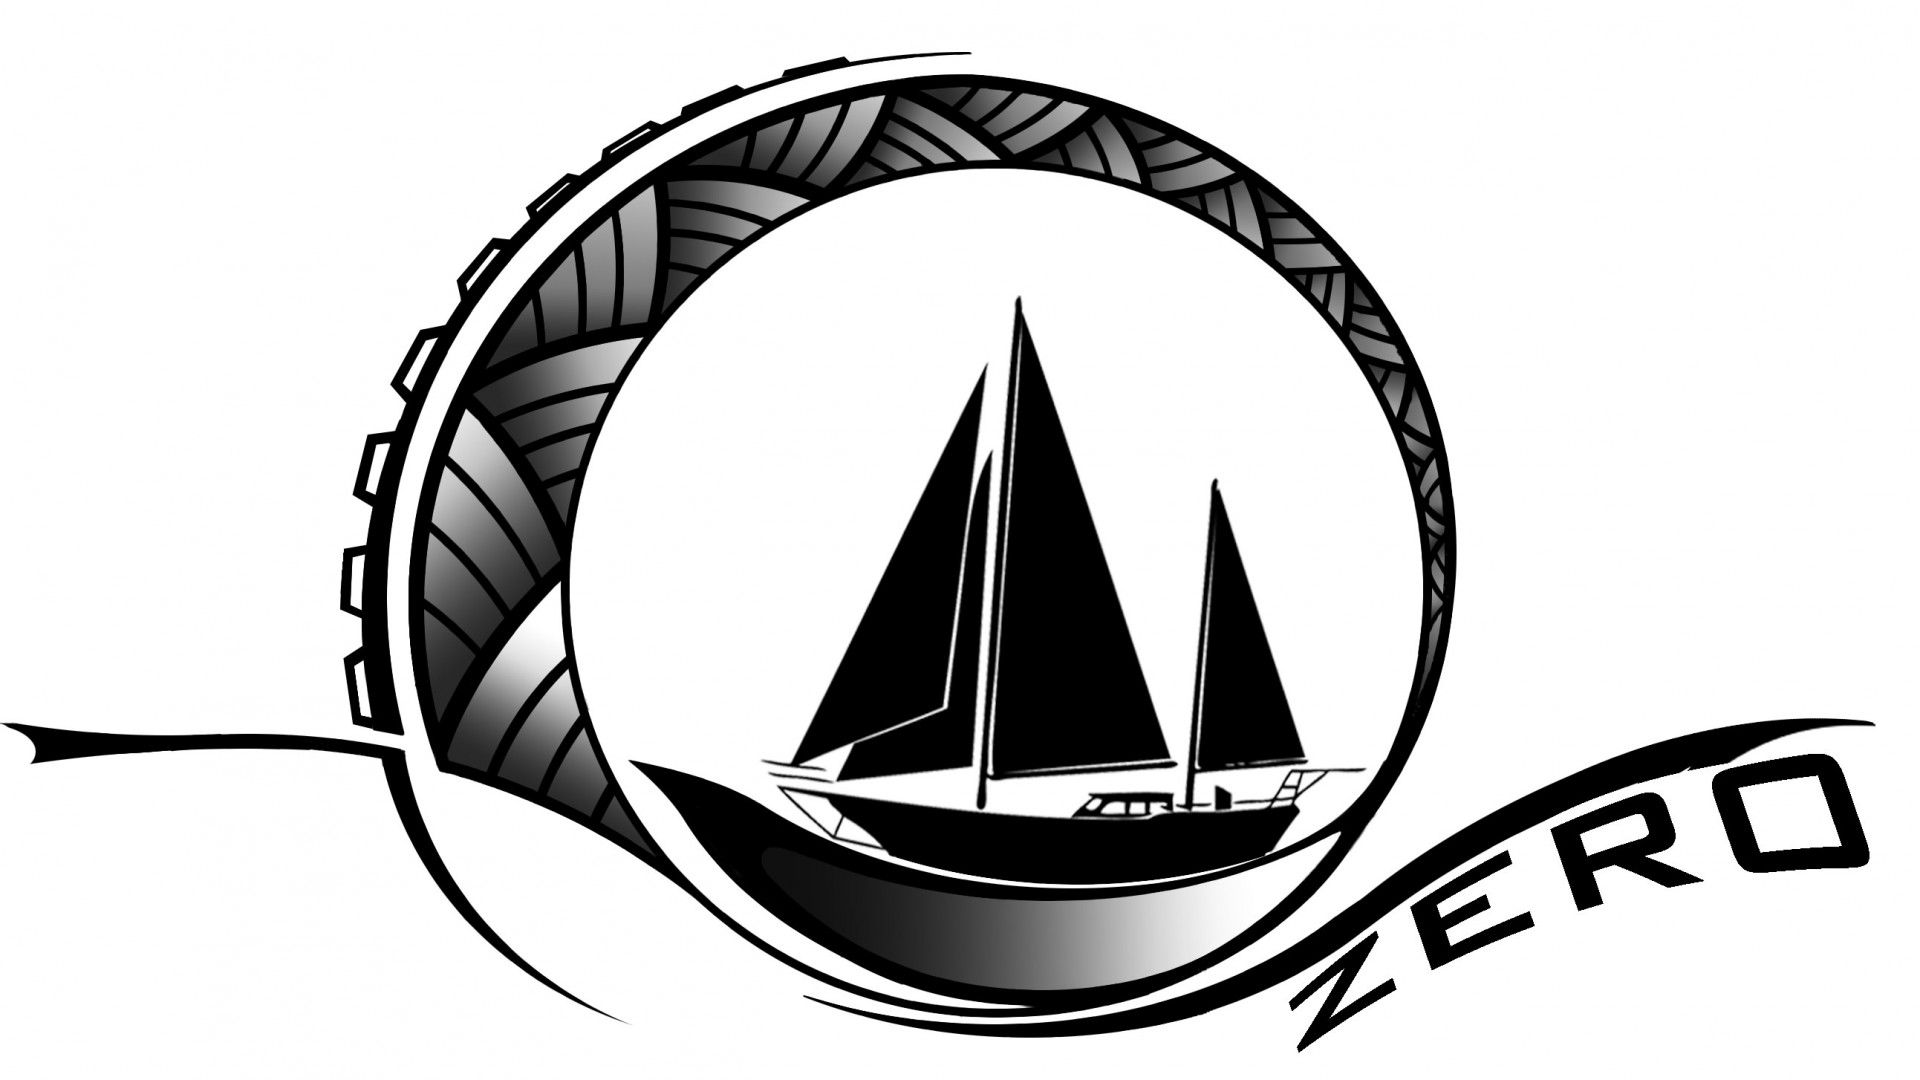 Logo NEW